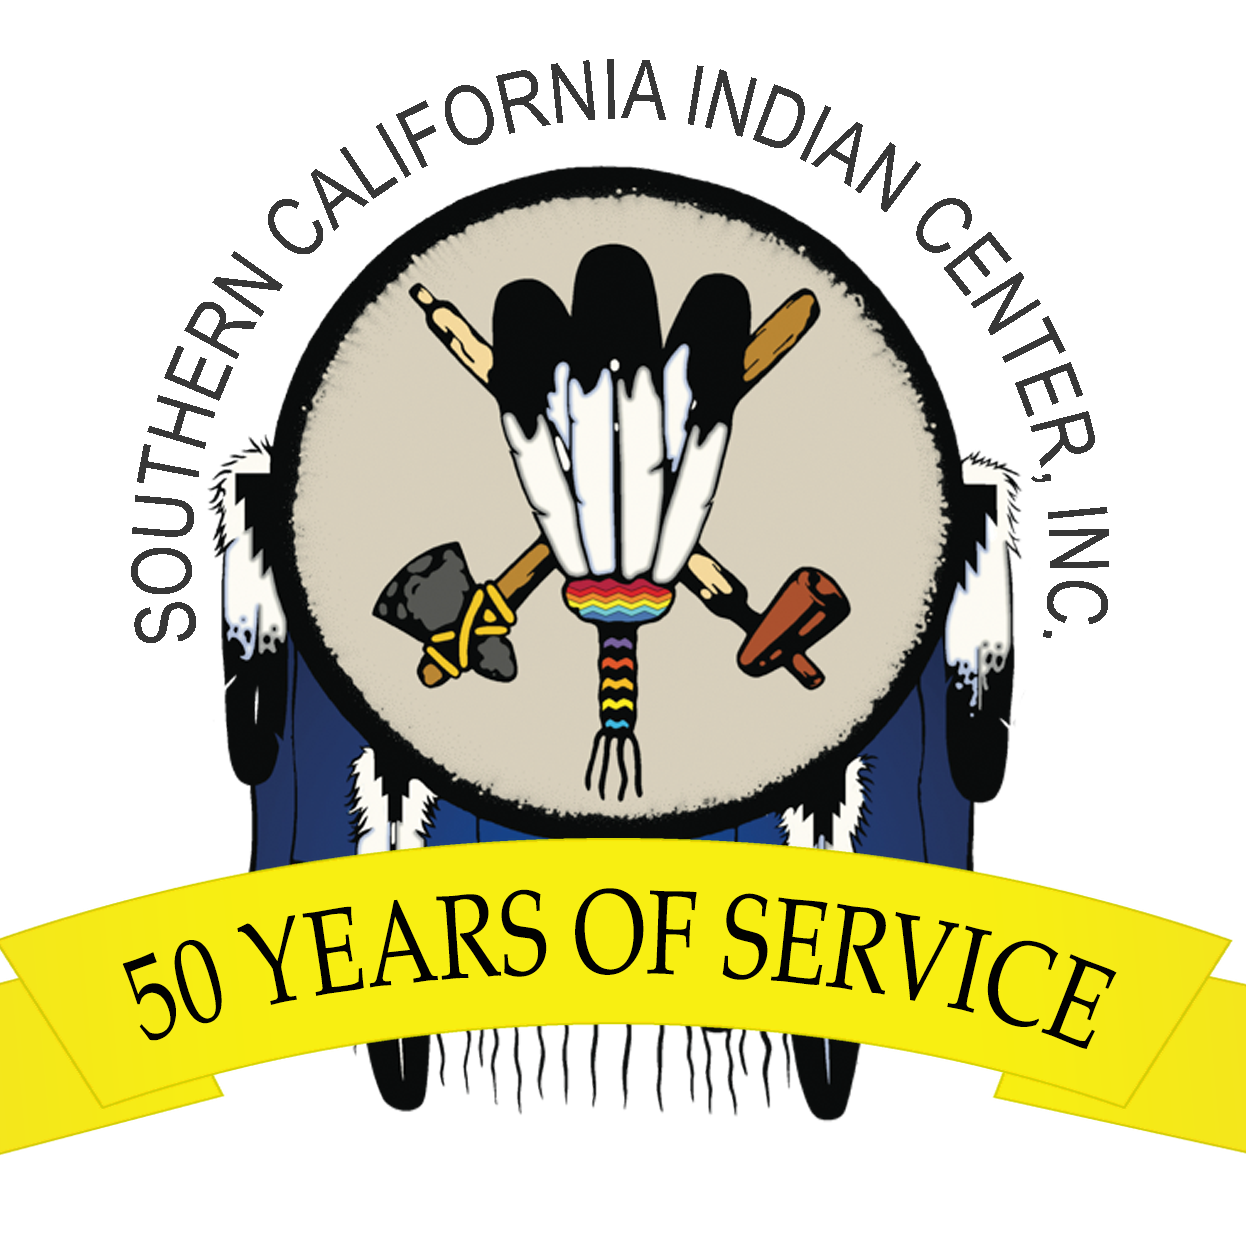 Native American Organization in San Diego California - Southern California Indian Center, Inc.